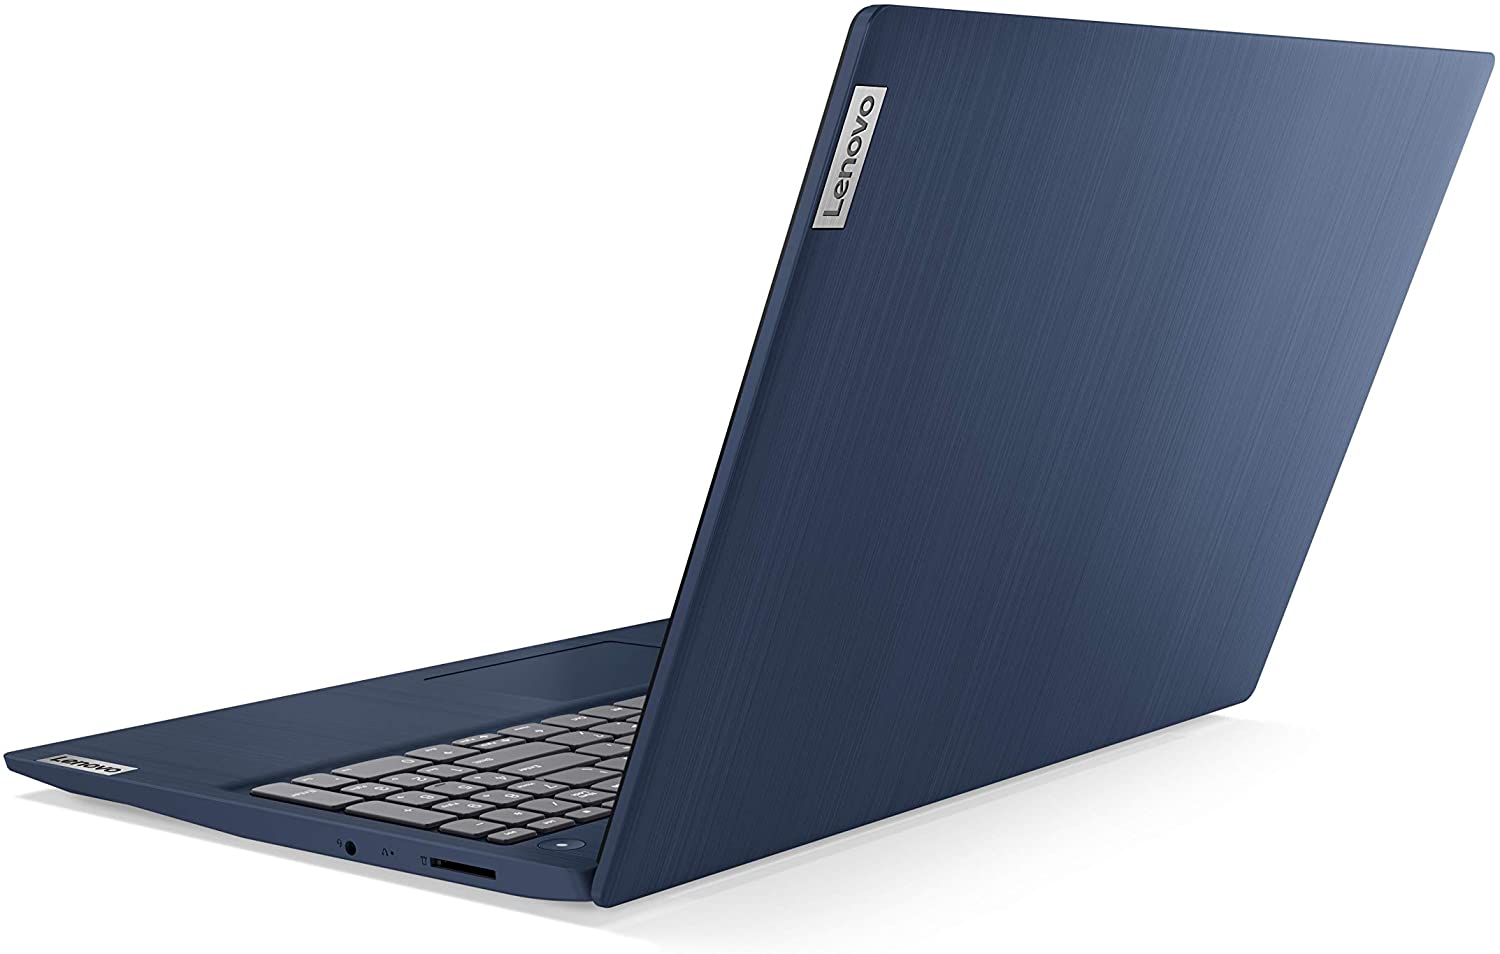  Lenovo IdeaPad 3 15.6" Laptop Intel Core i3-1005G1 8GB RAM 256GB SSD Windows 10 in S Mode Blue, 4-10.99 Inches